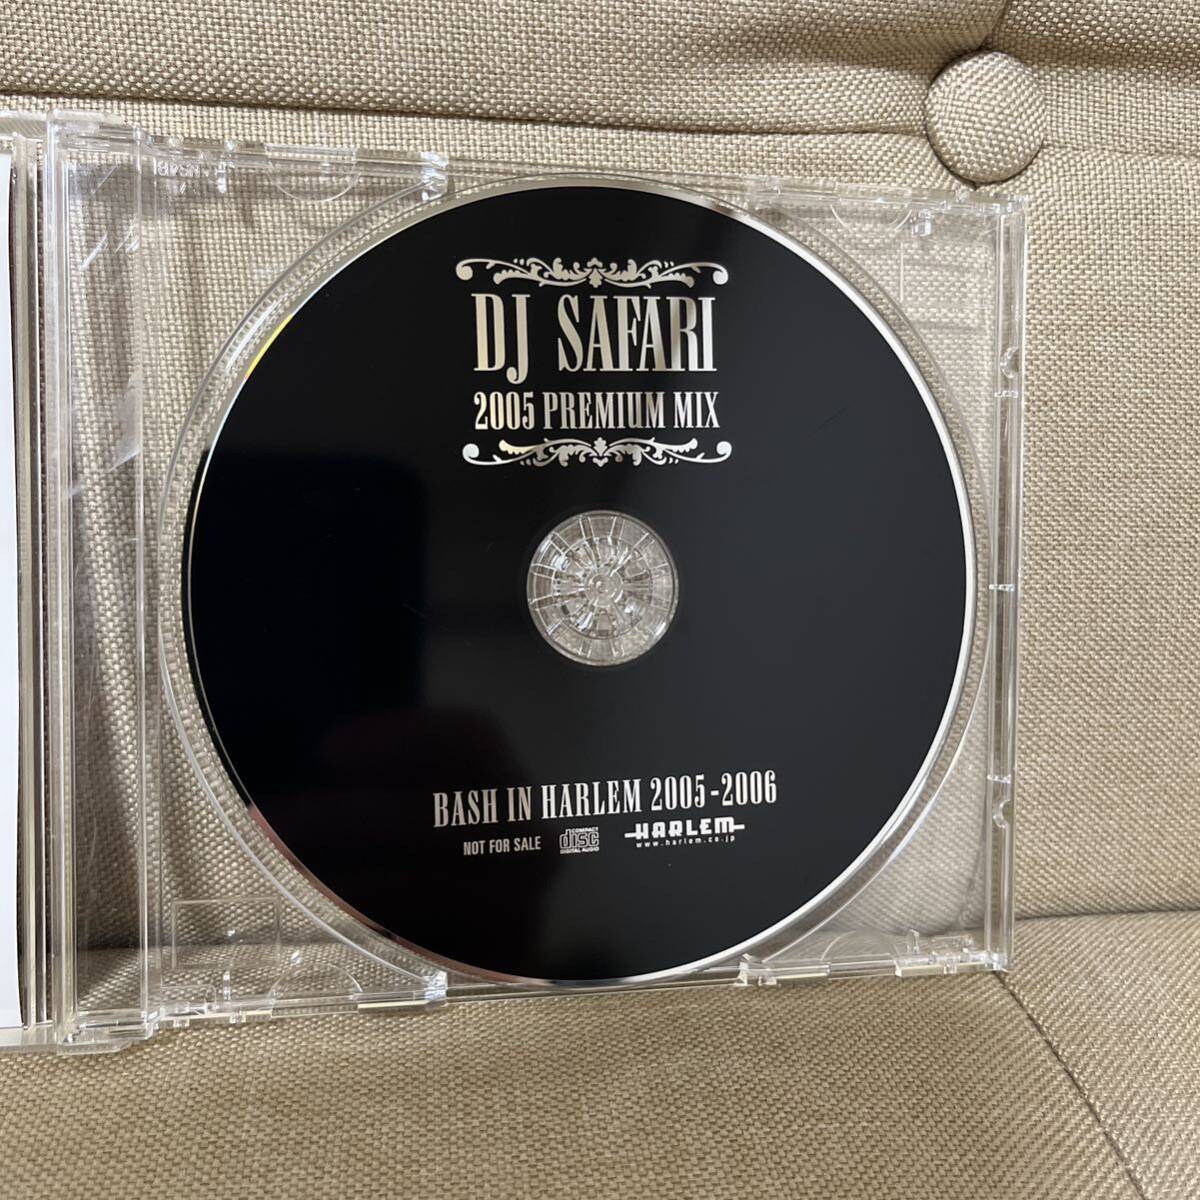 【DJ SAFARI】2005 PREMIUM MIX (BASH IN HARLEM 2005 - 2006)【MIX CD】【HIPHOP / R&B】【廃盤】【送料無料】_画像2